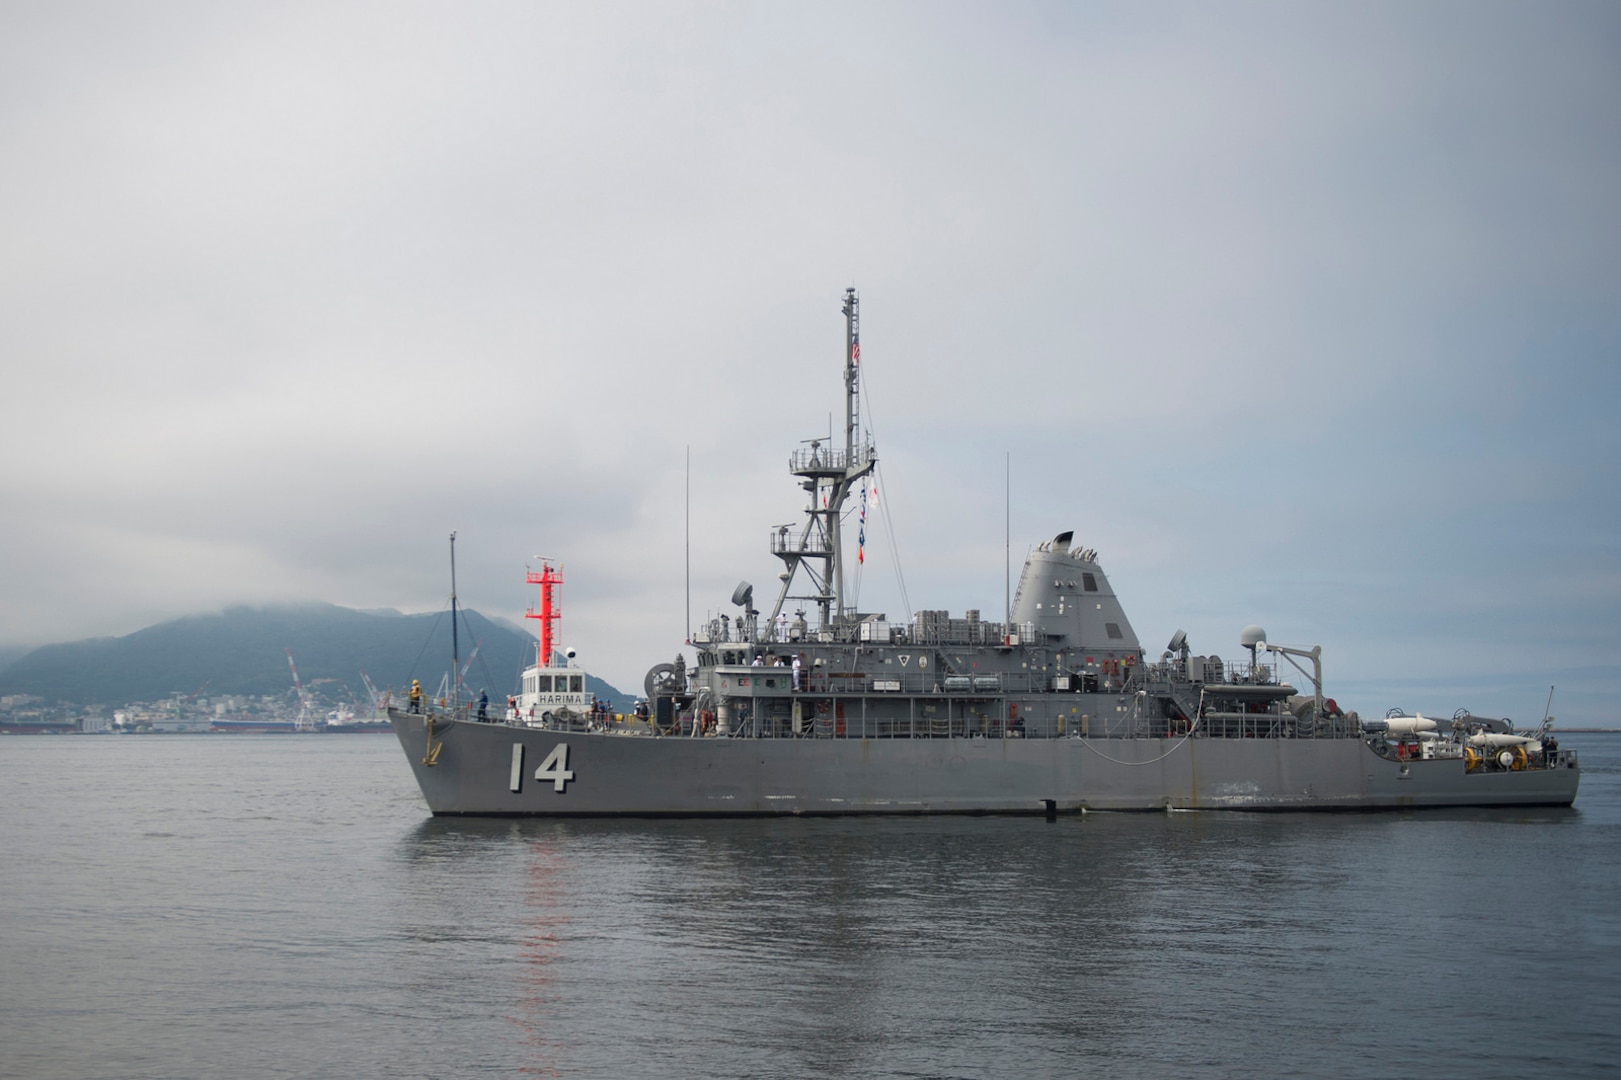 USS Chief Pulls into Hakodate